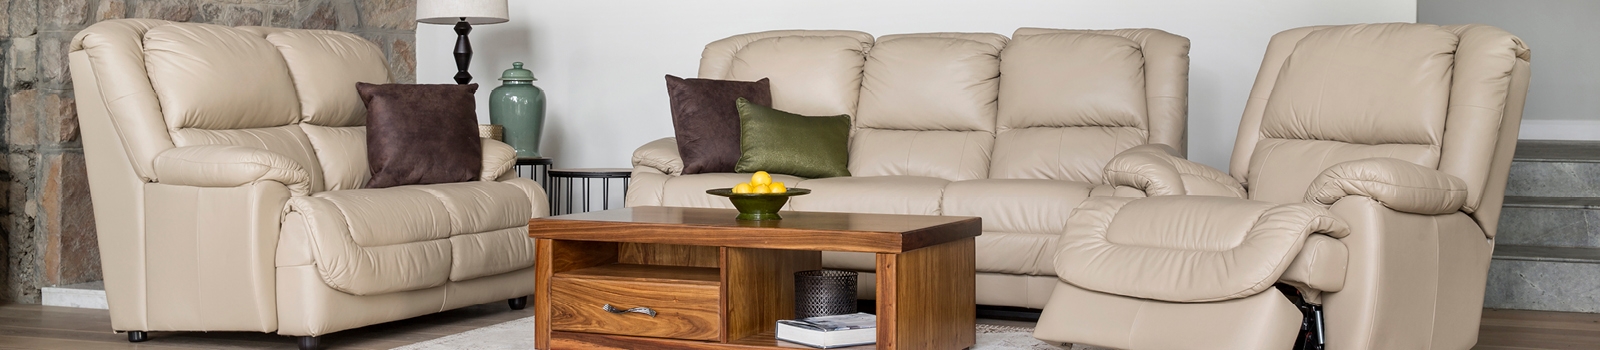 Neutral Furniture The Smart Colour Choice